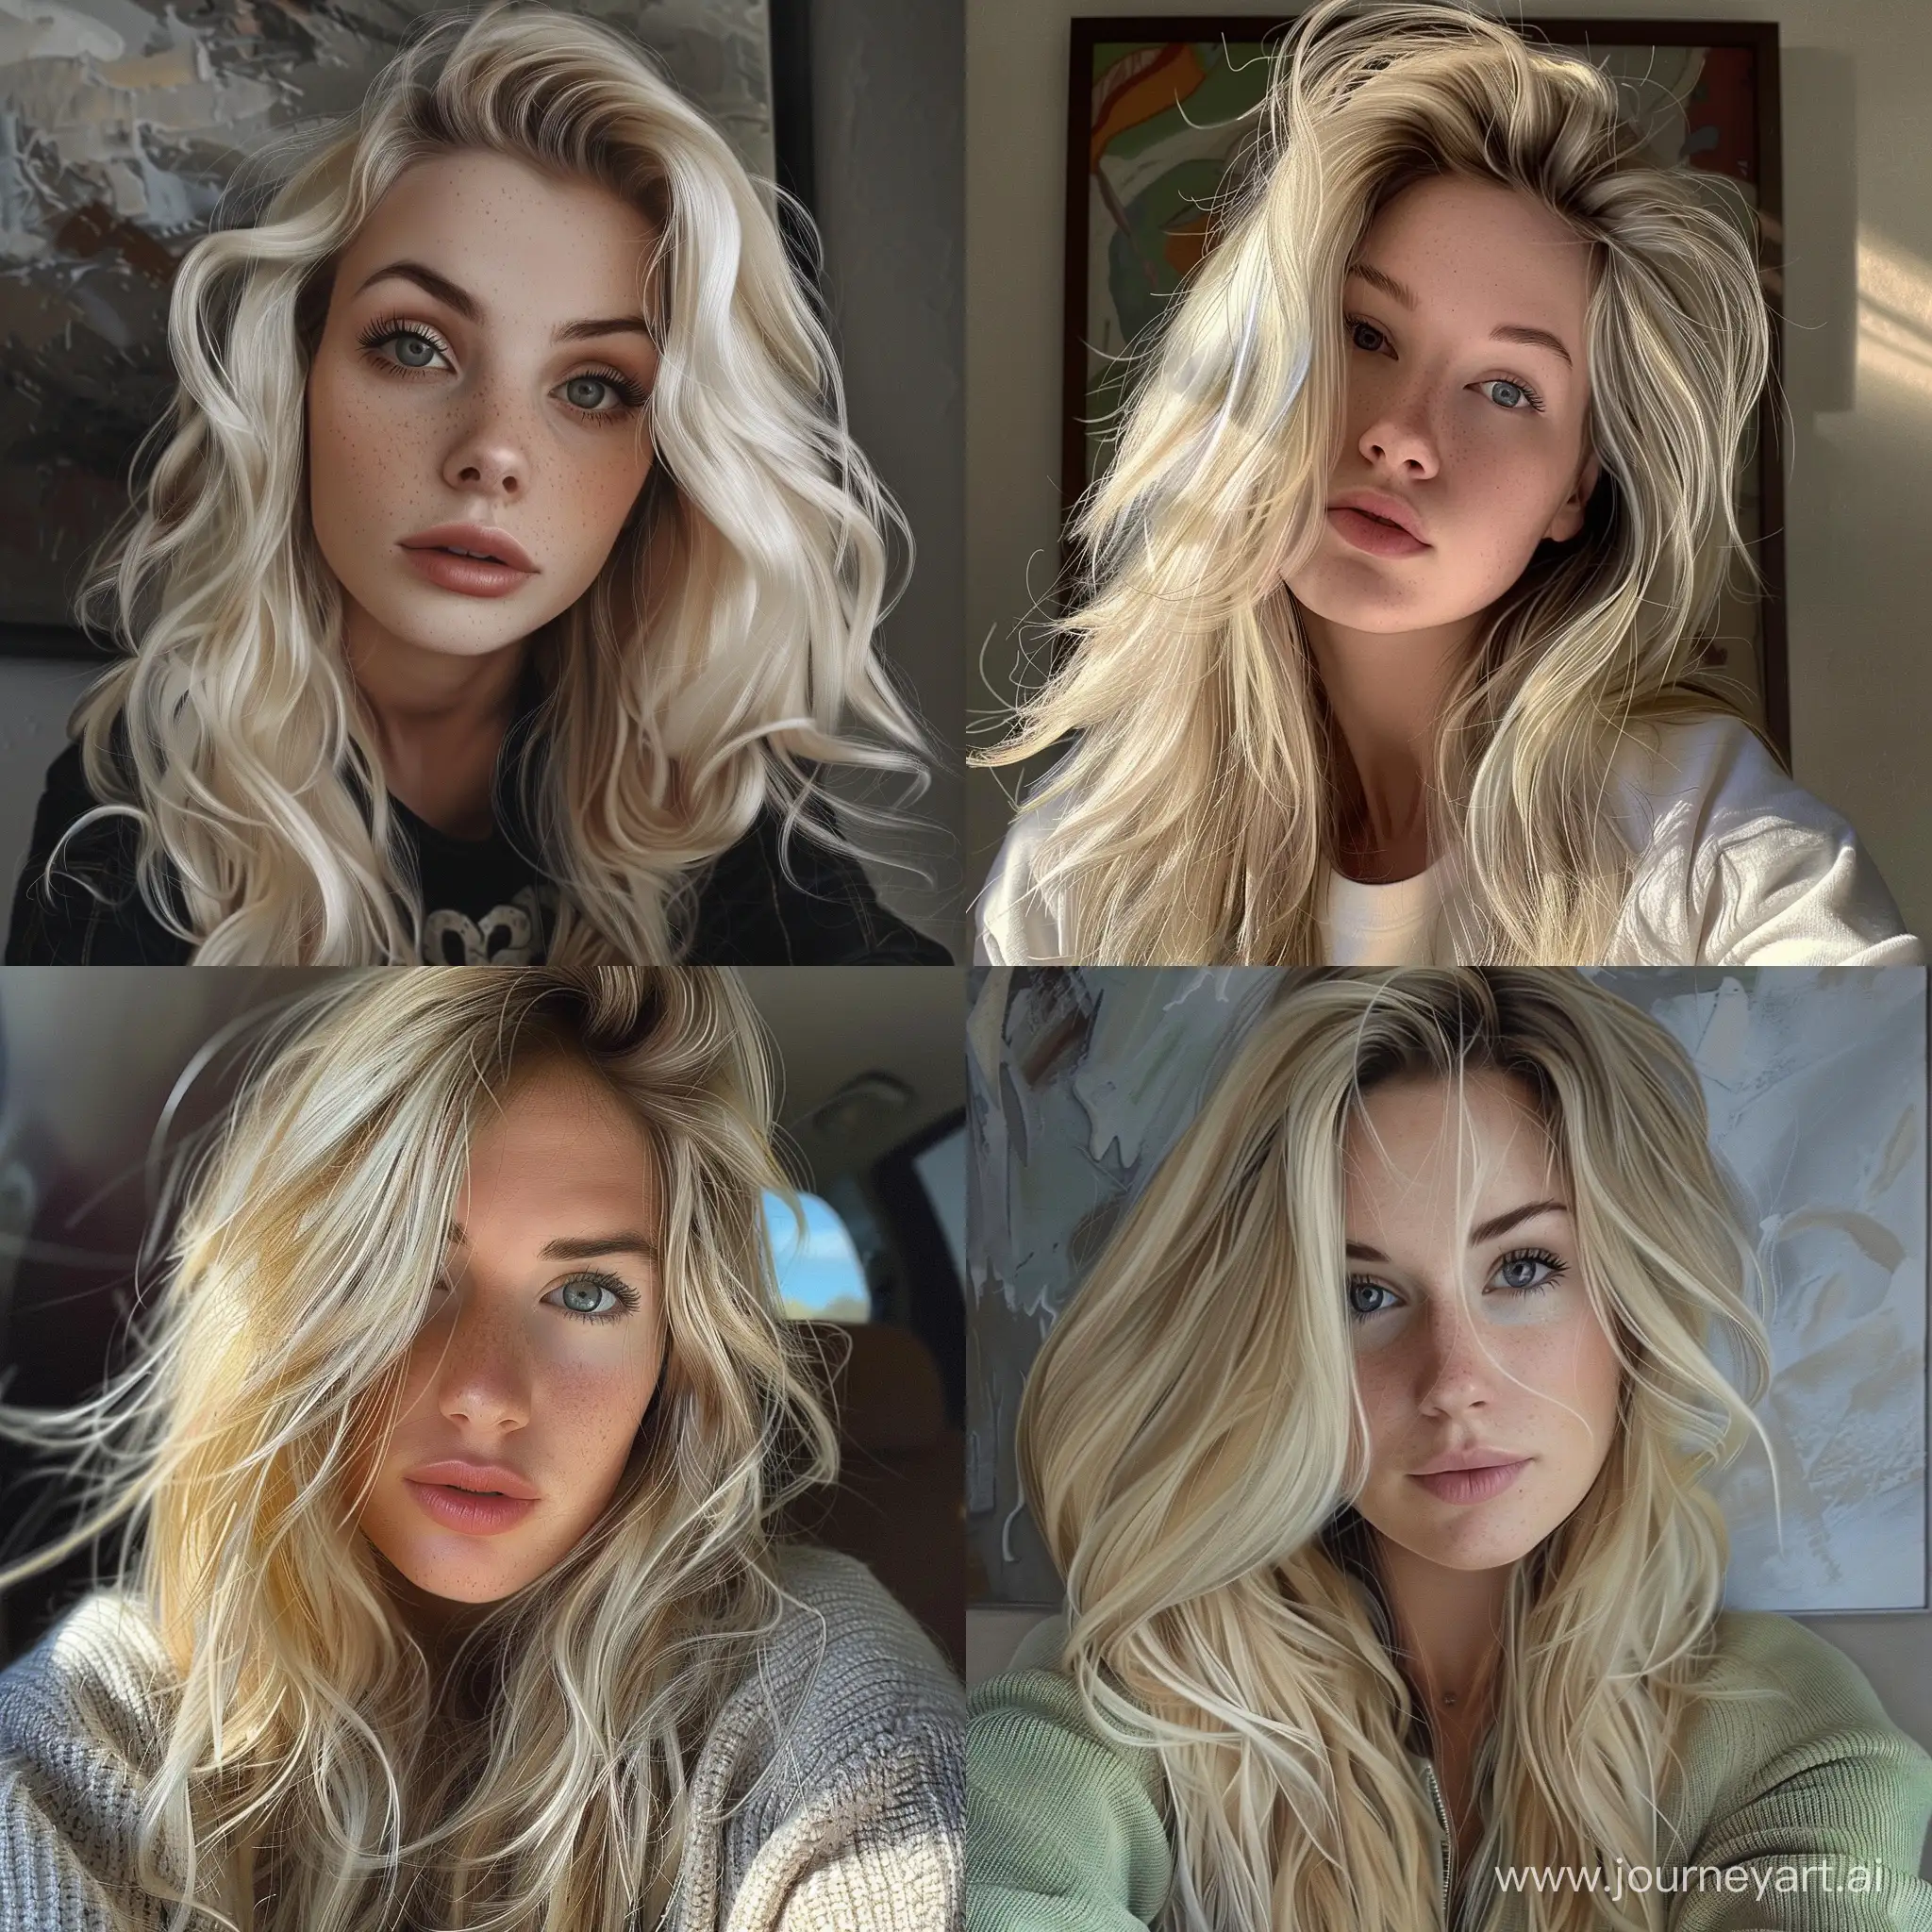 Photorealistic-Blonde-Woman-Taking-a-Selfie